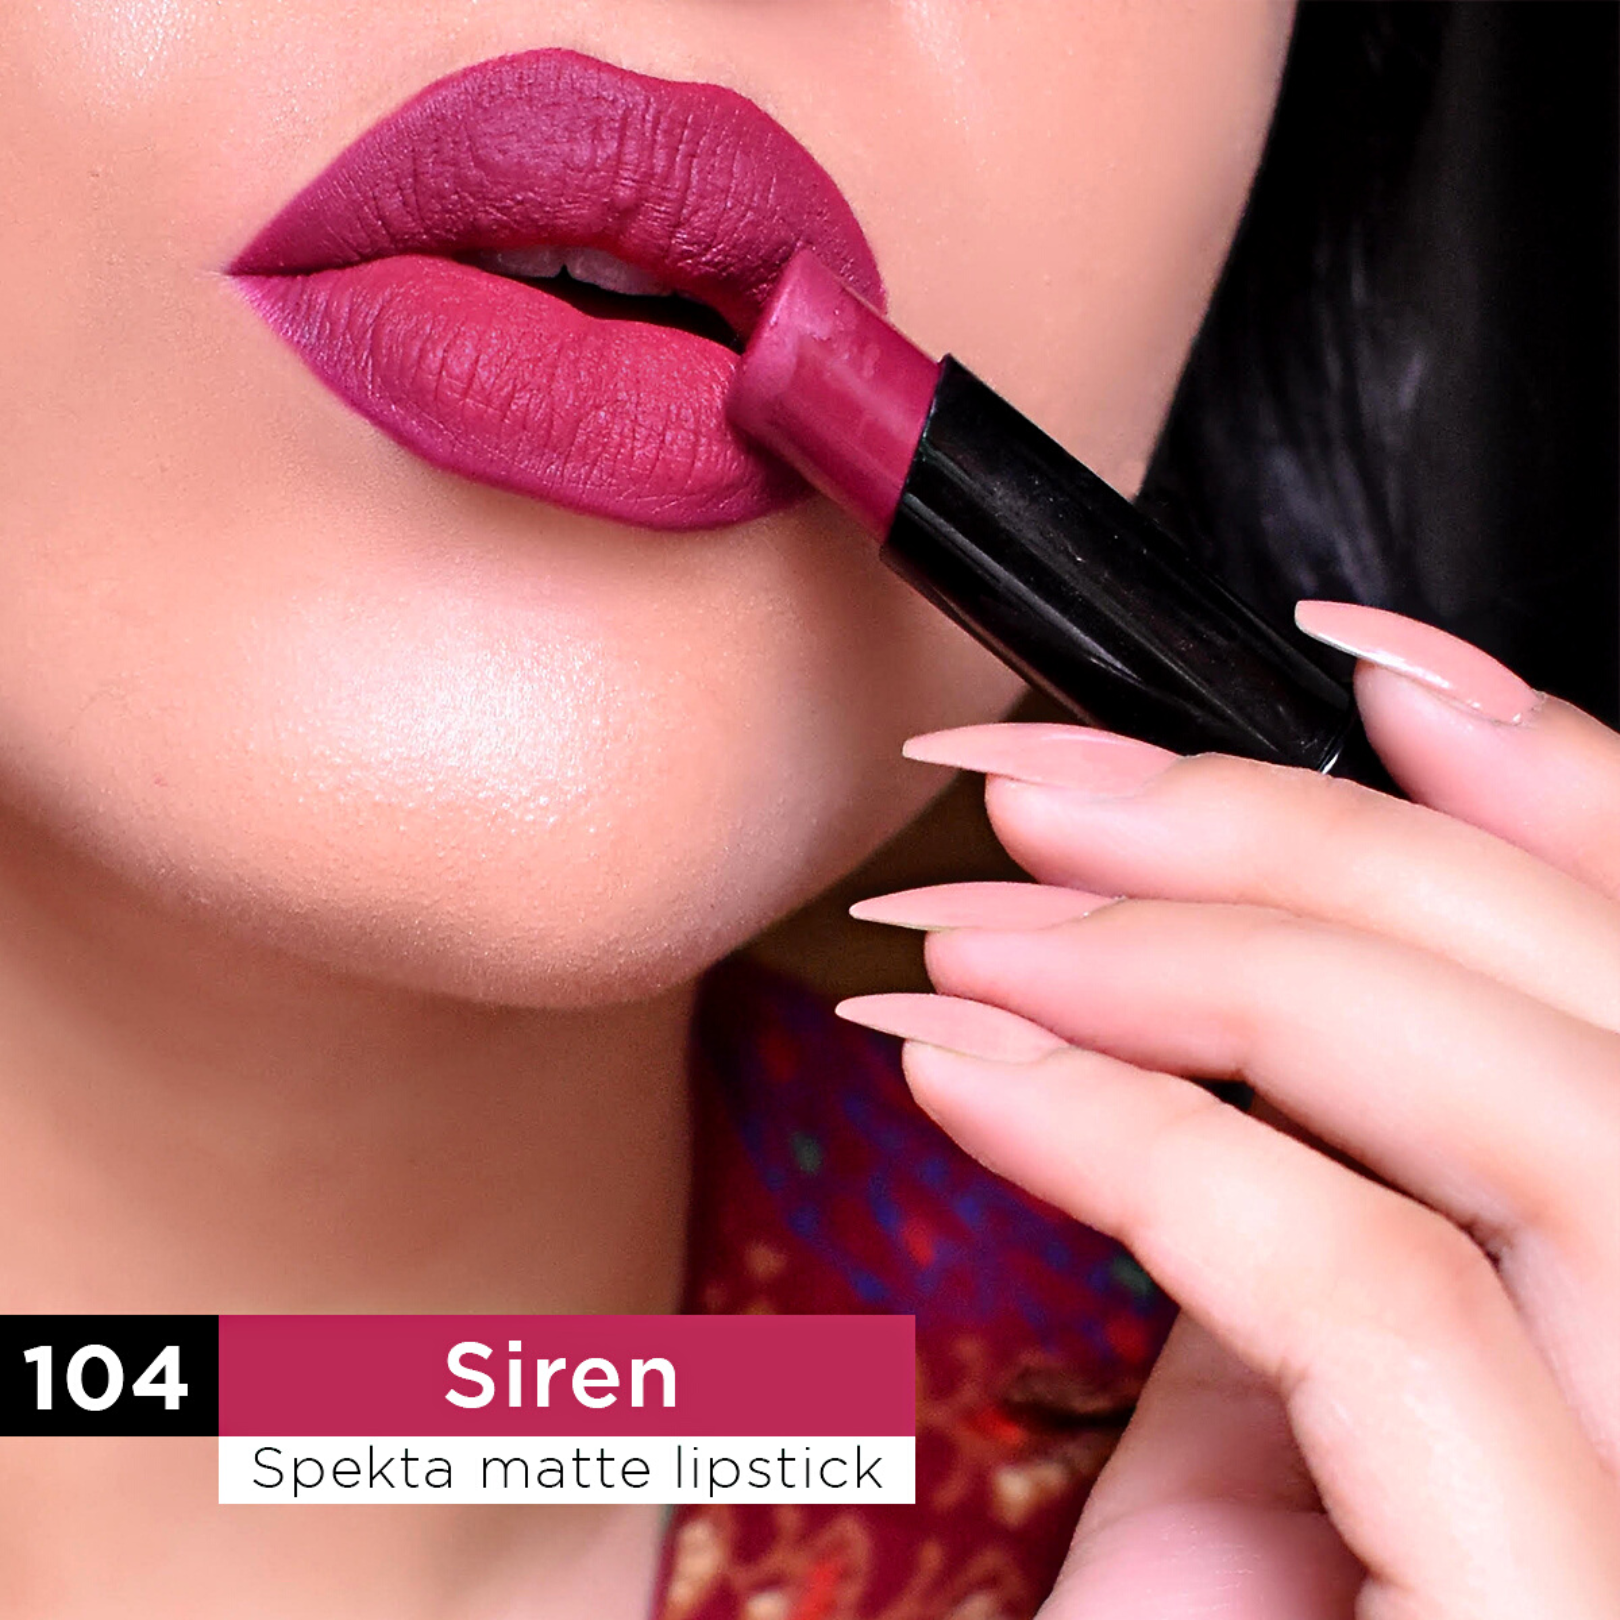 Lips & Tips Combo Set of Lipstick- 104 Siren & Nail Polish- 20 Meadow